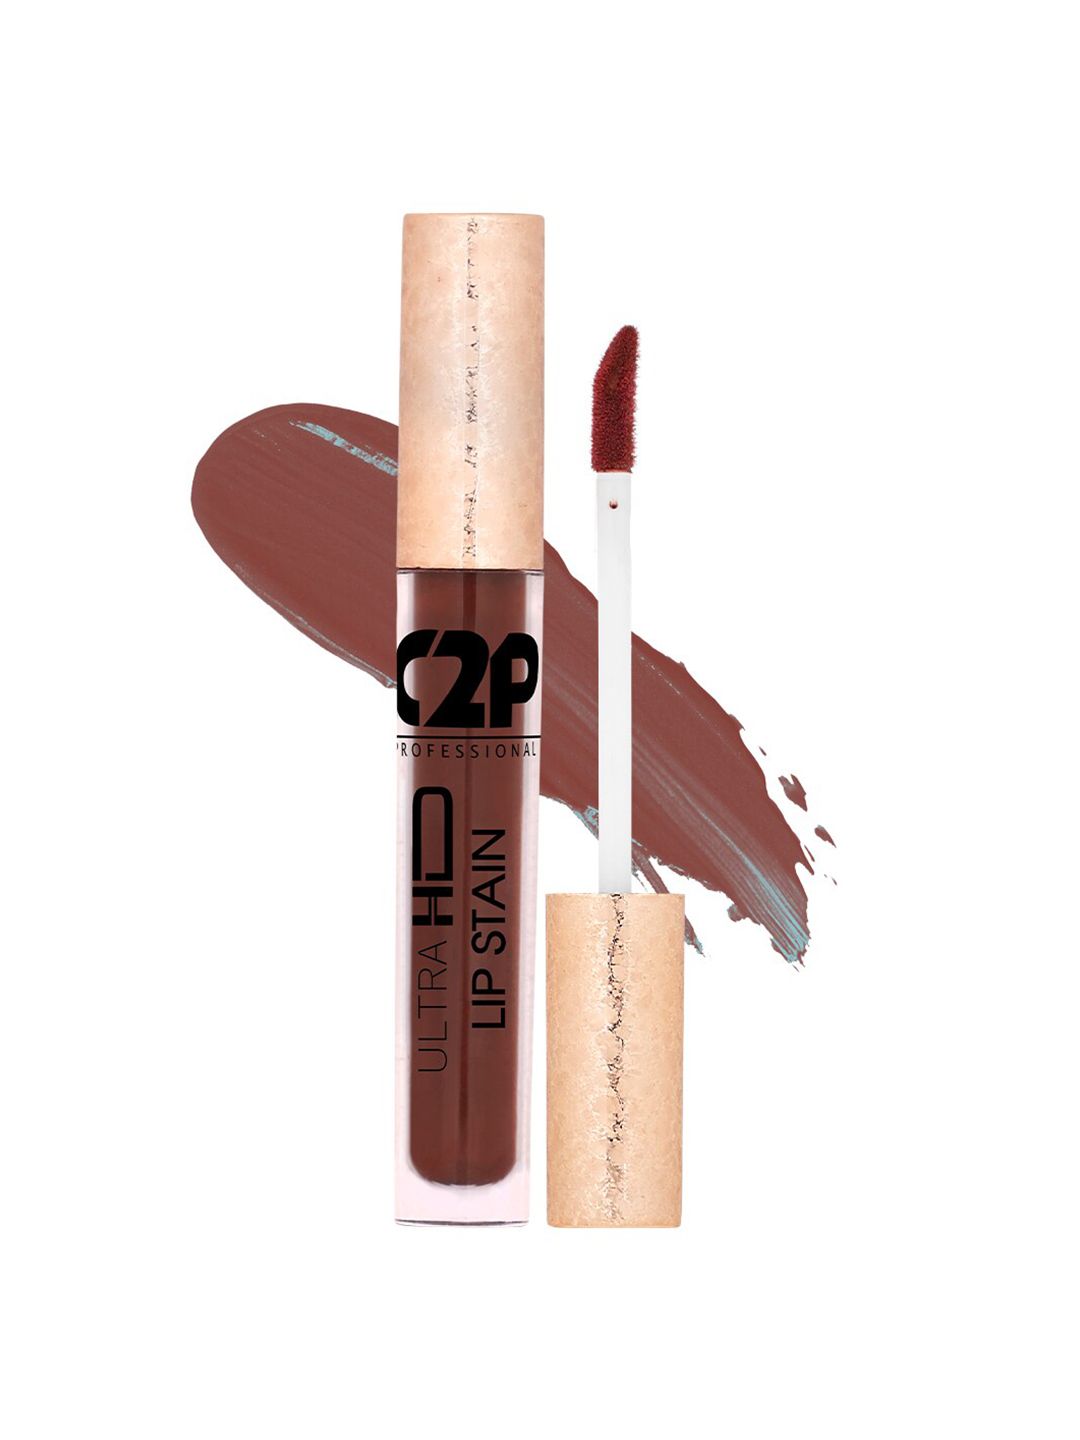 C2P PROFESSIONAL MAKEUP Lip Stain Liquid Lipstick - Cococa Mocha 19 5 ml Price in India